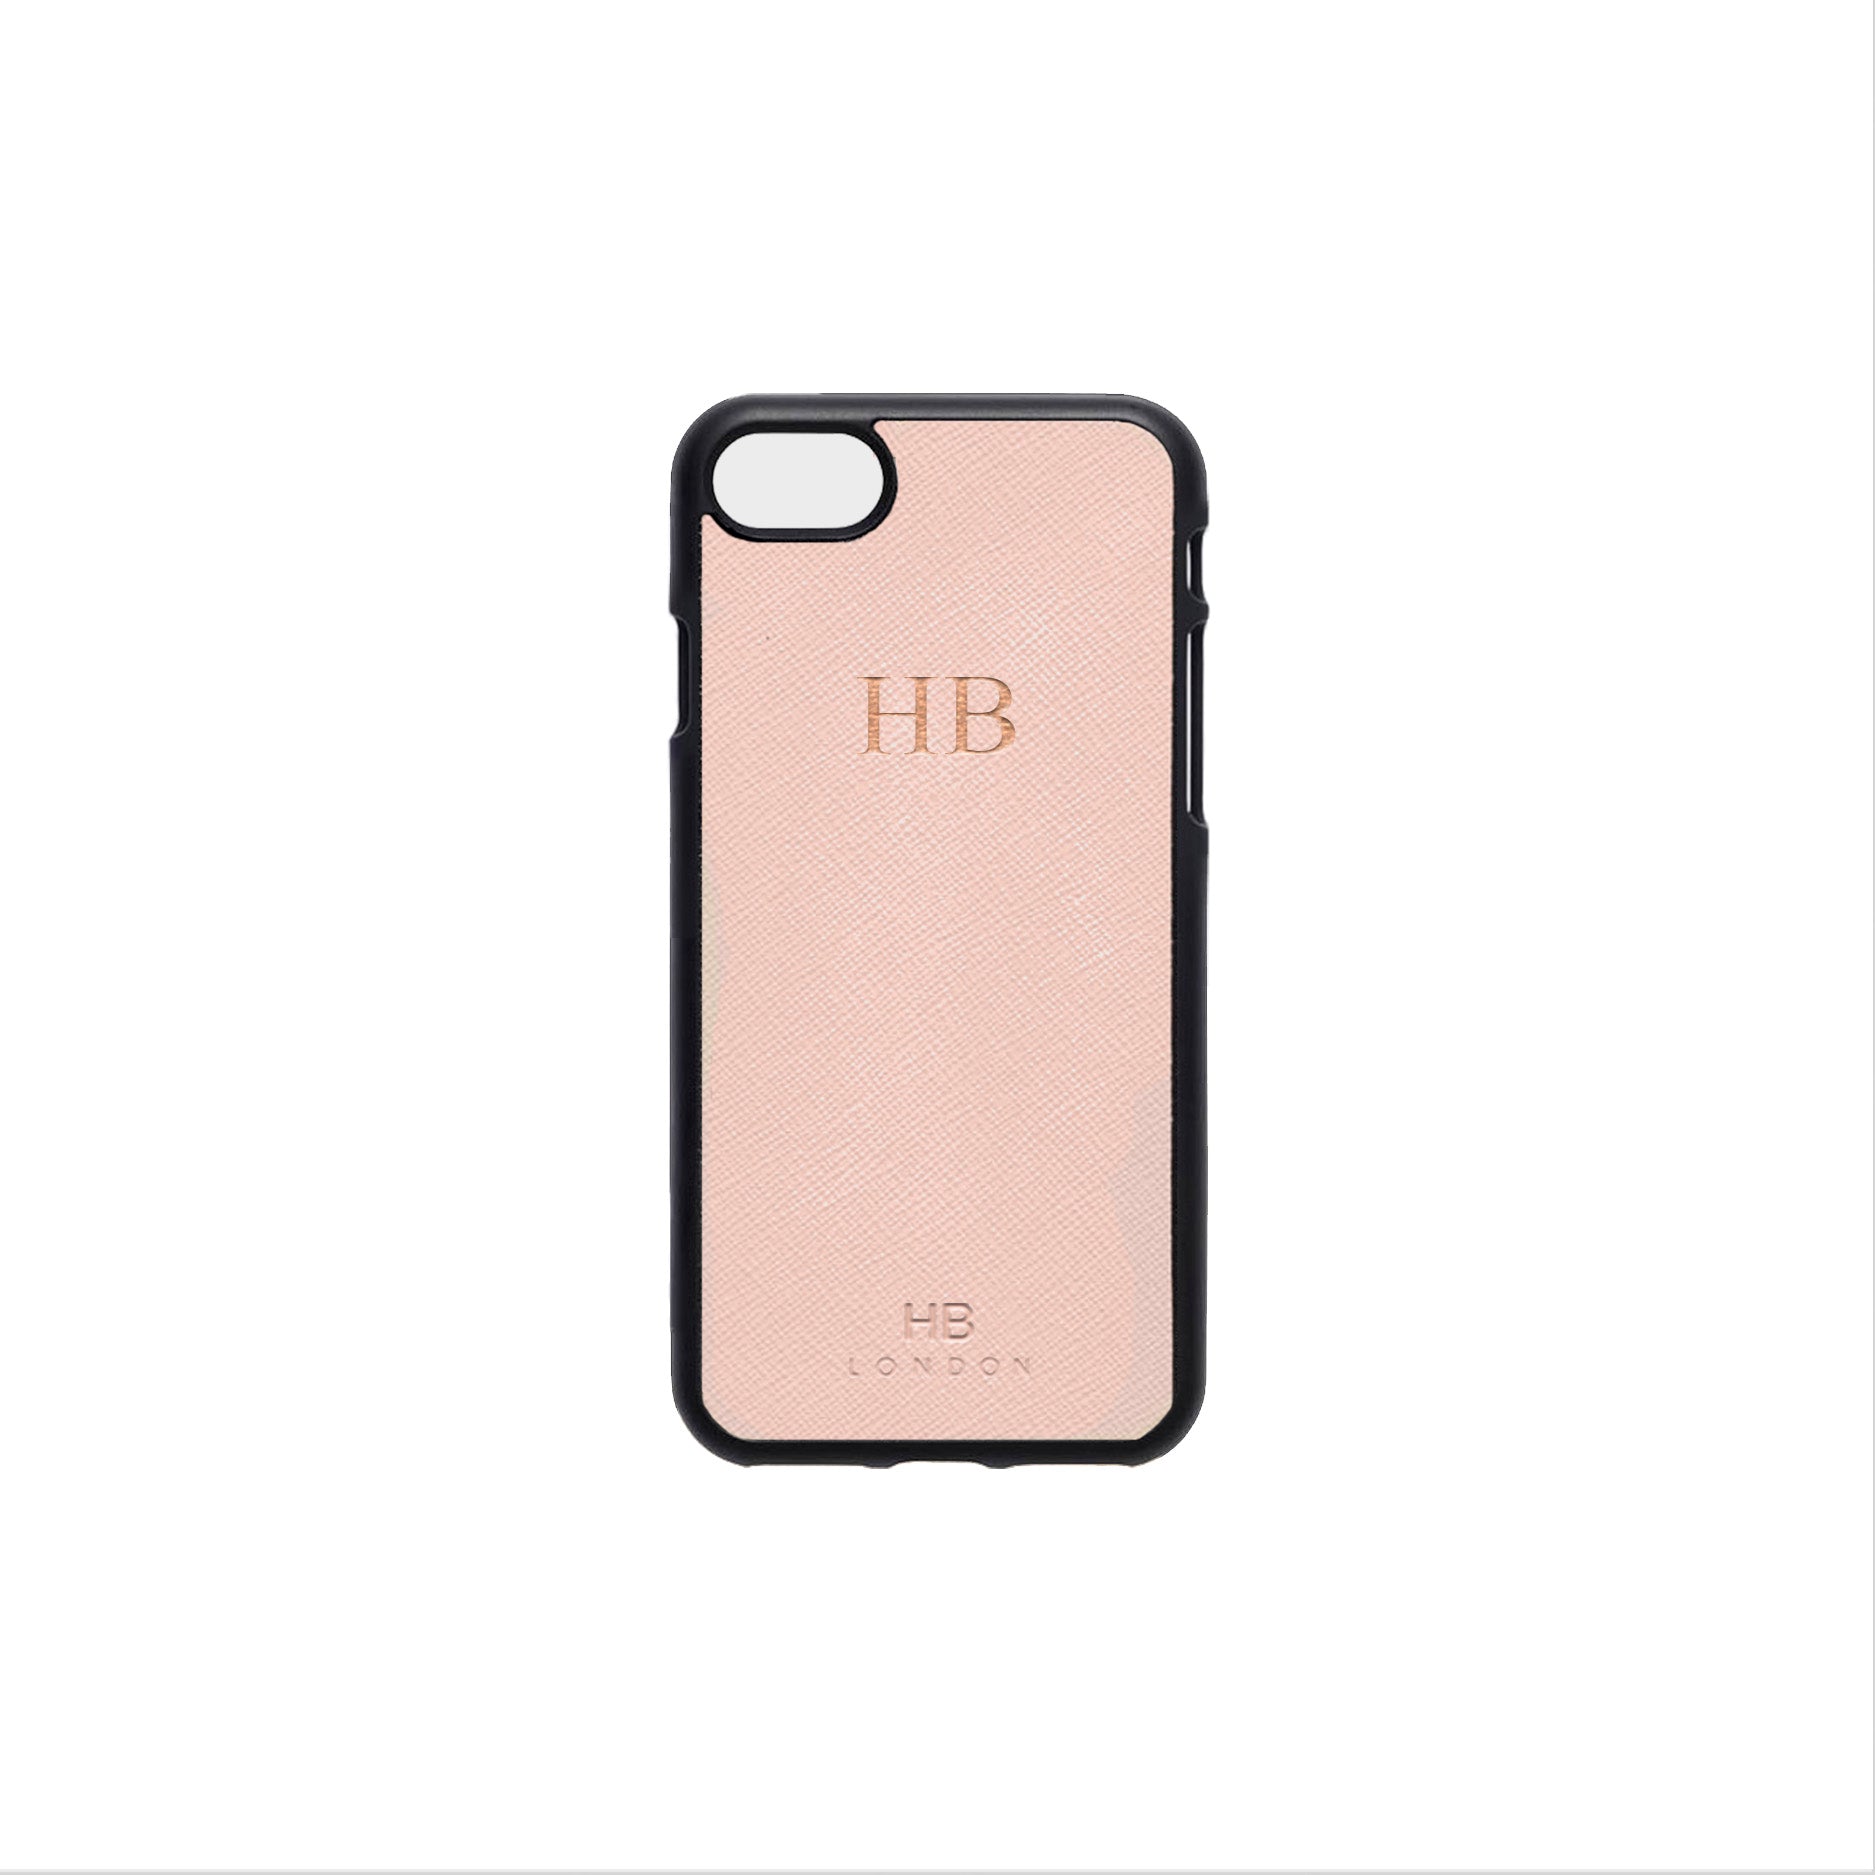 Blush Saffiano Leather iPhone7/8 Phone Case - HB LONDON